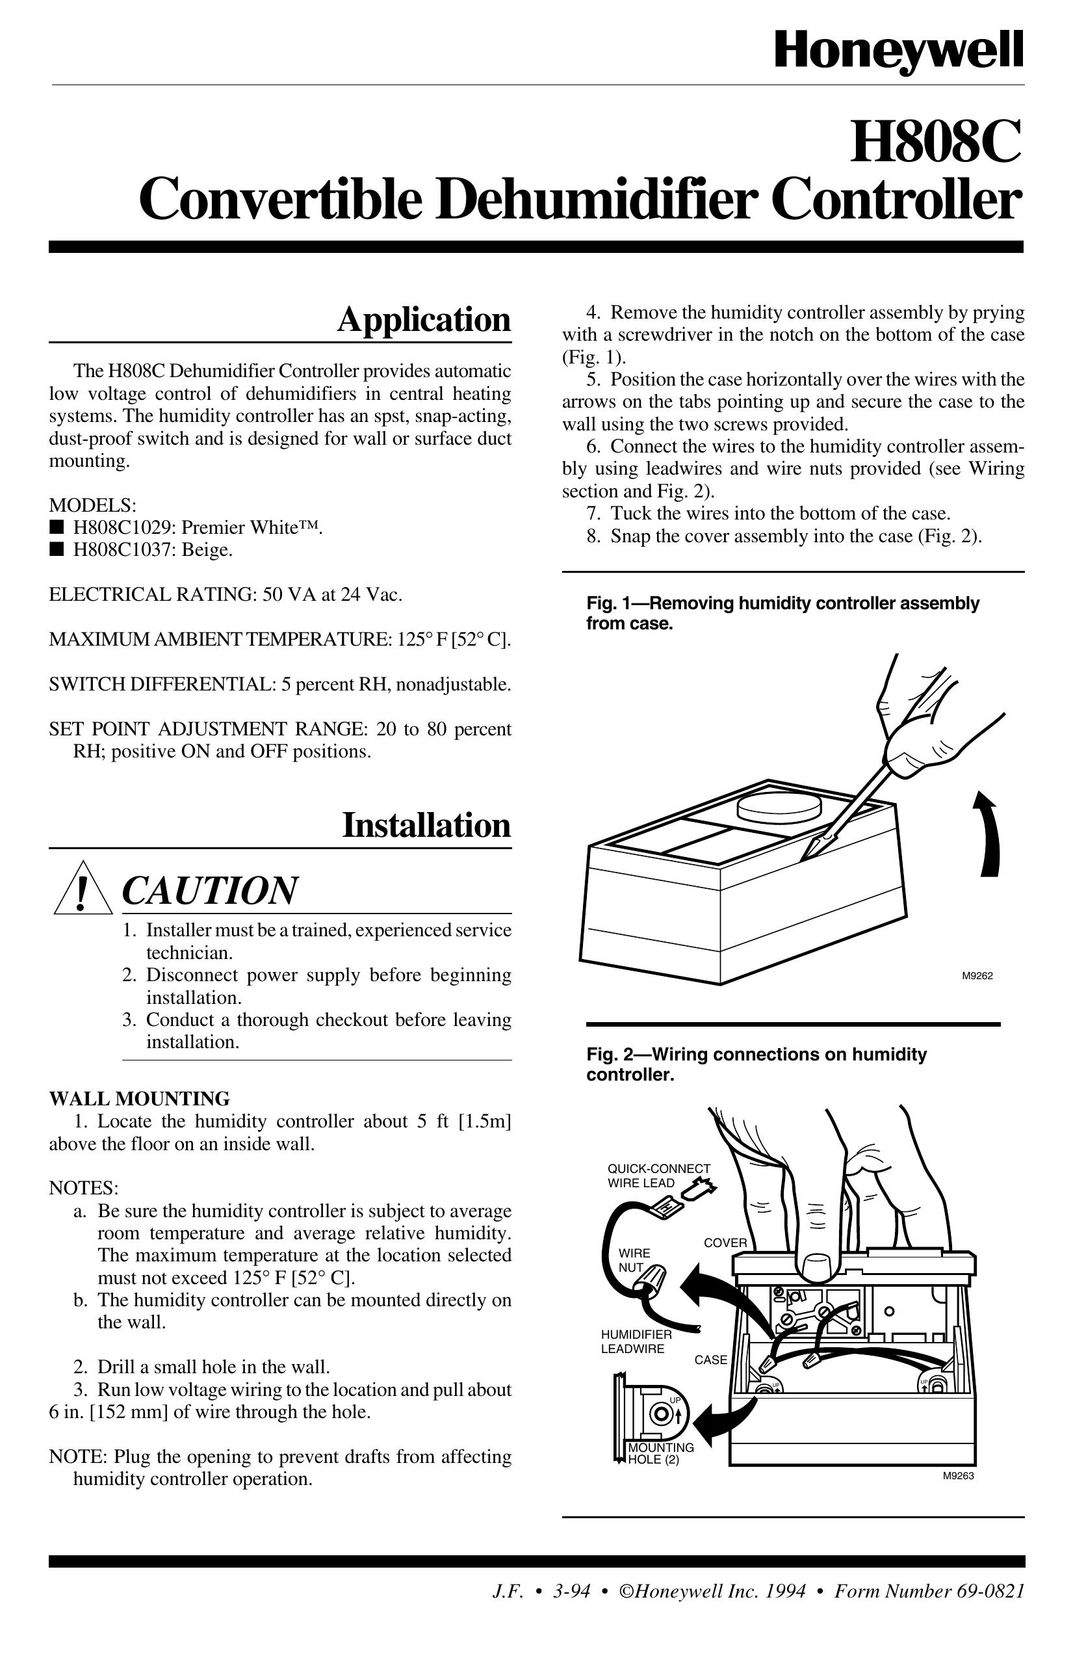 Honeywell H808C Dehumidifier User Manual